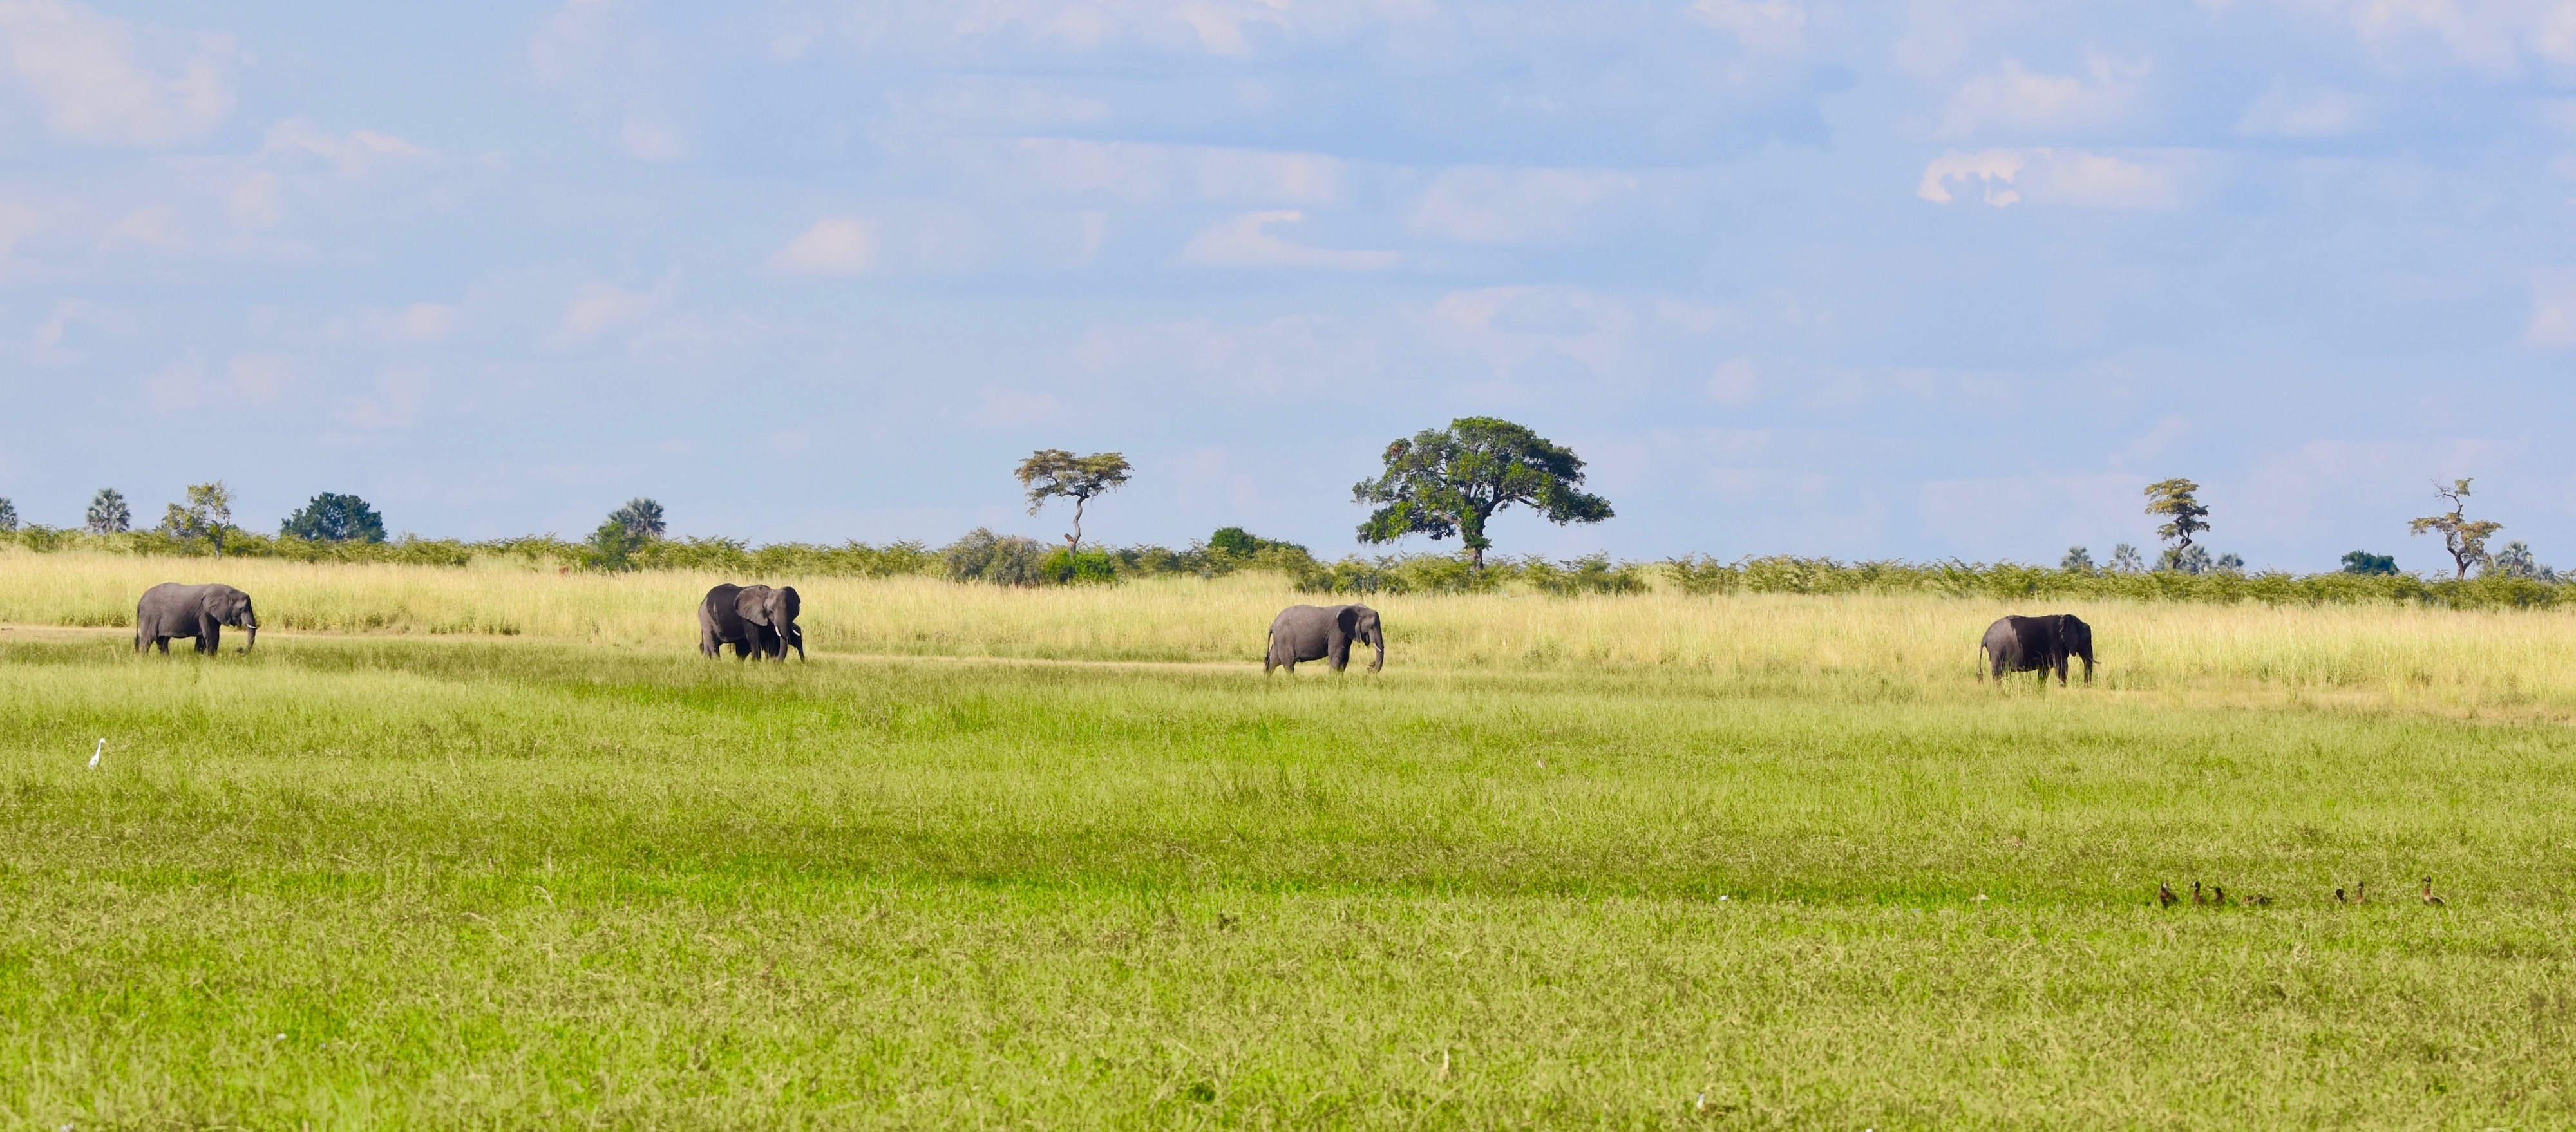 Elephants near the Chobe River